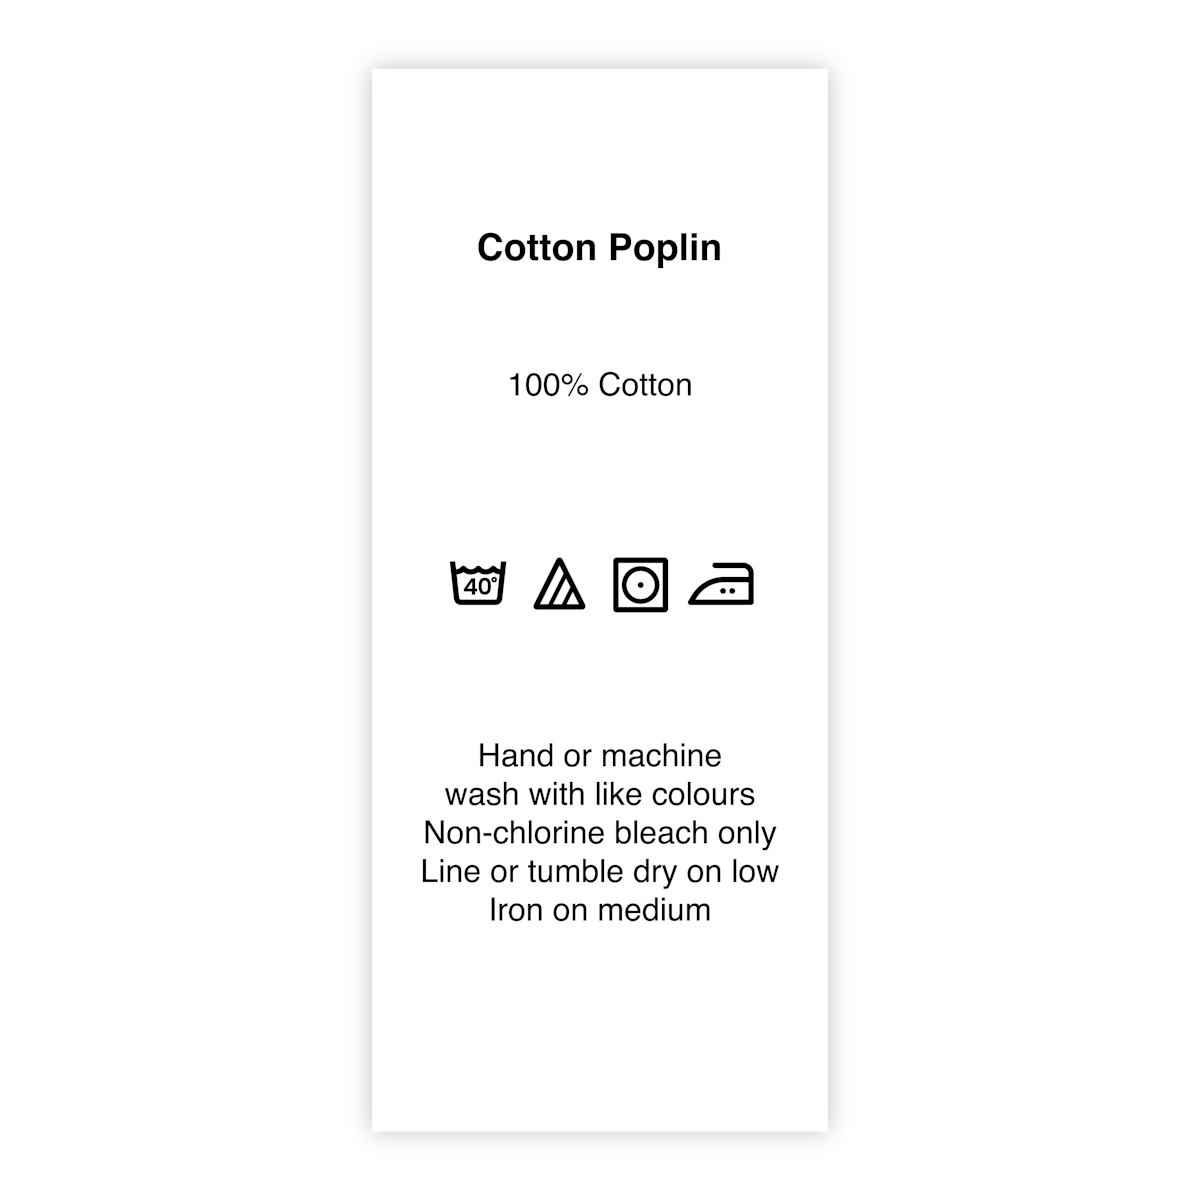  cotton poplin laundry care label